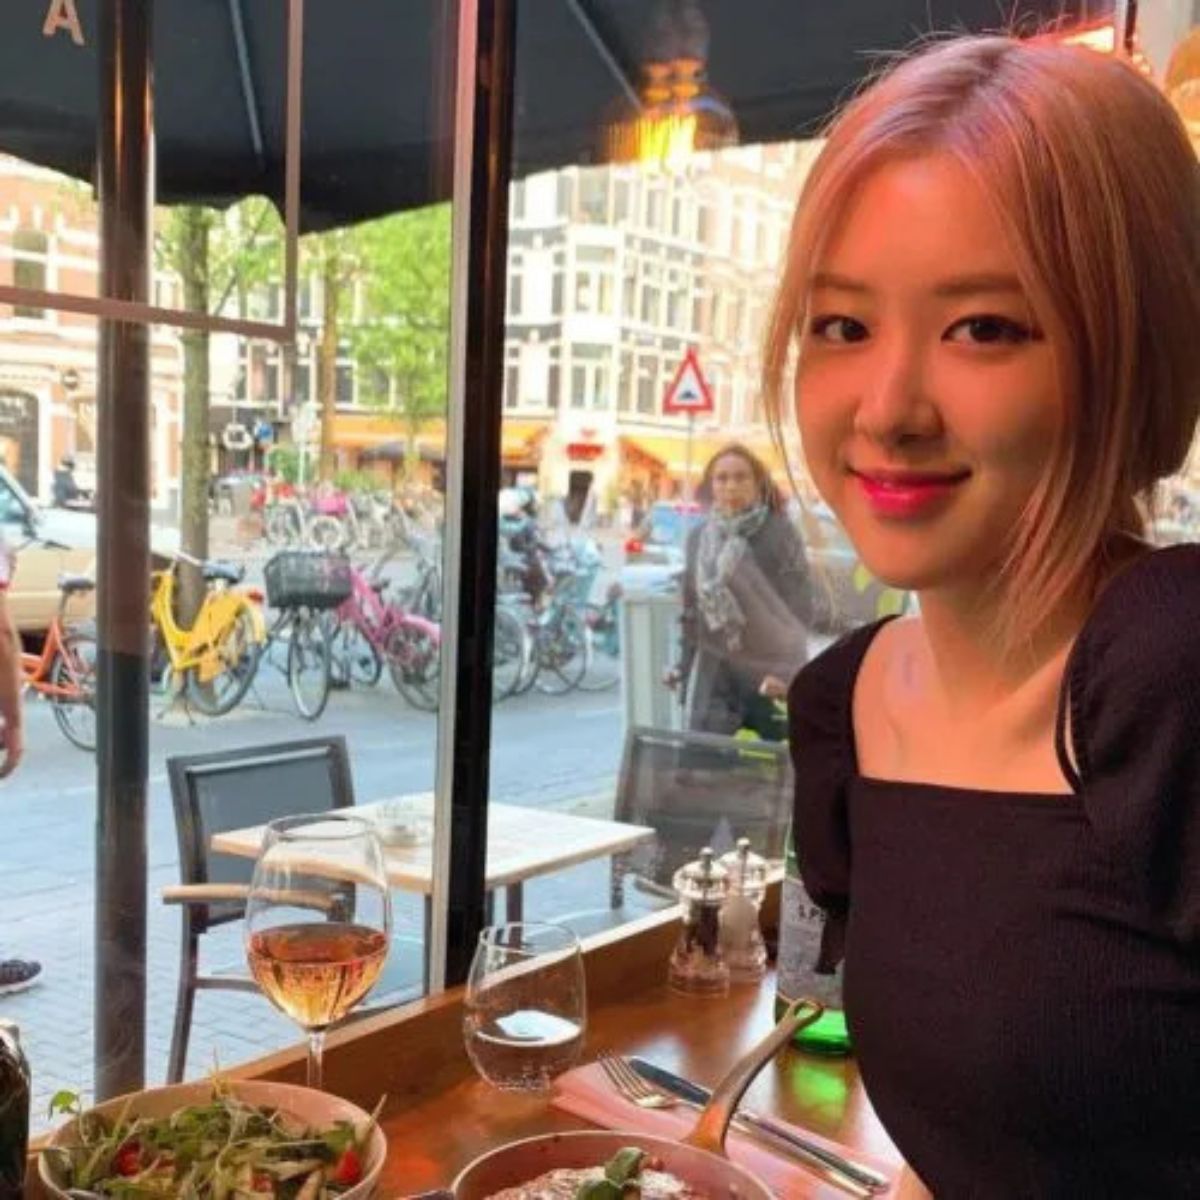 Look: Song Hye Kyo And Cha Eun Woo At A Chaumet Gala Dinner In Paris